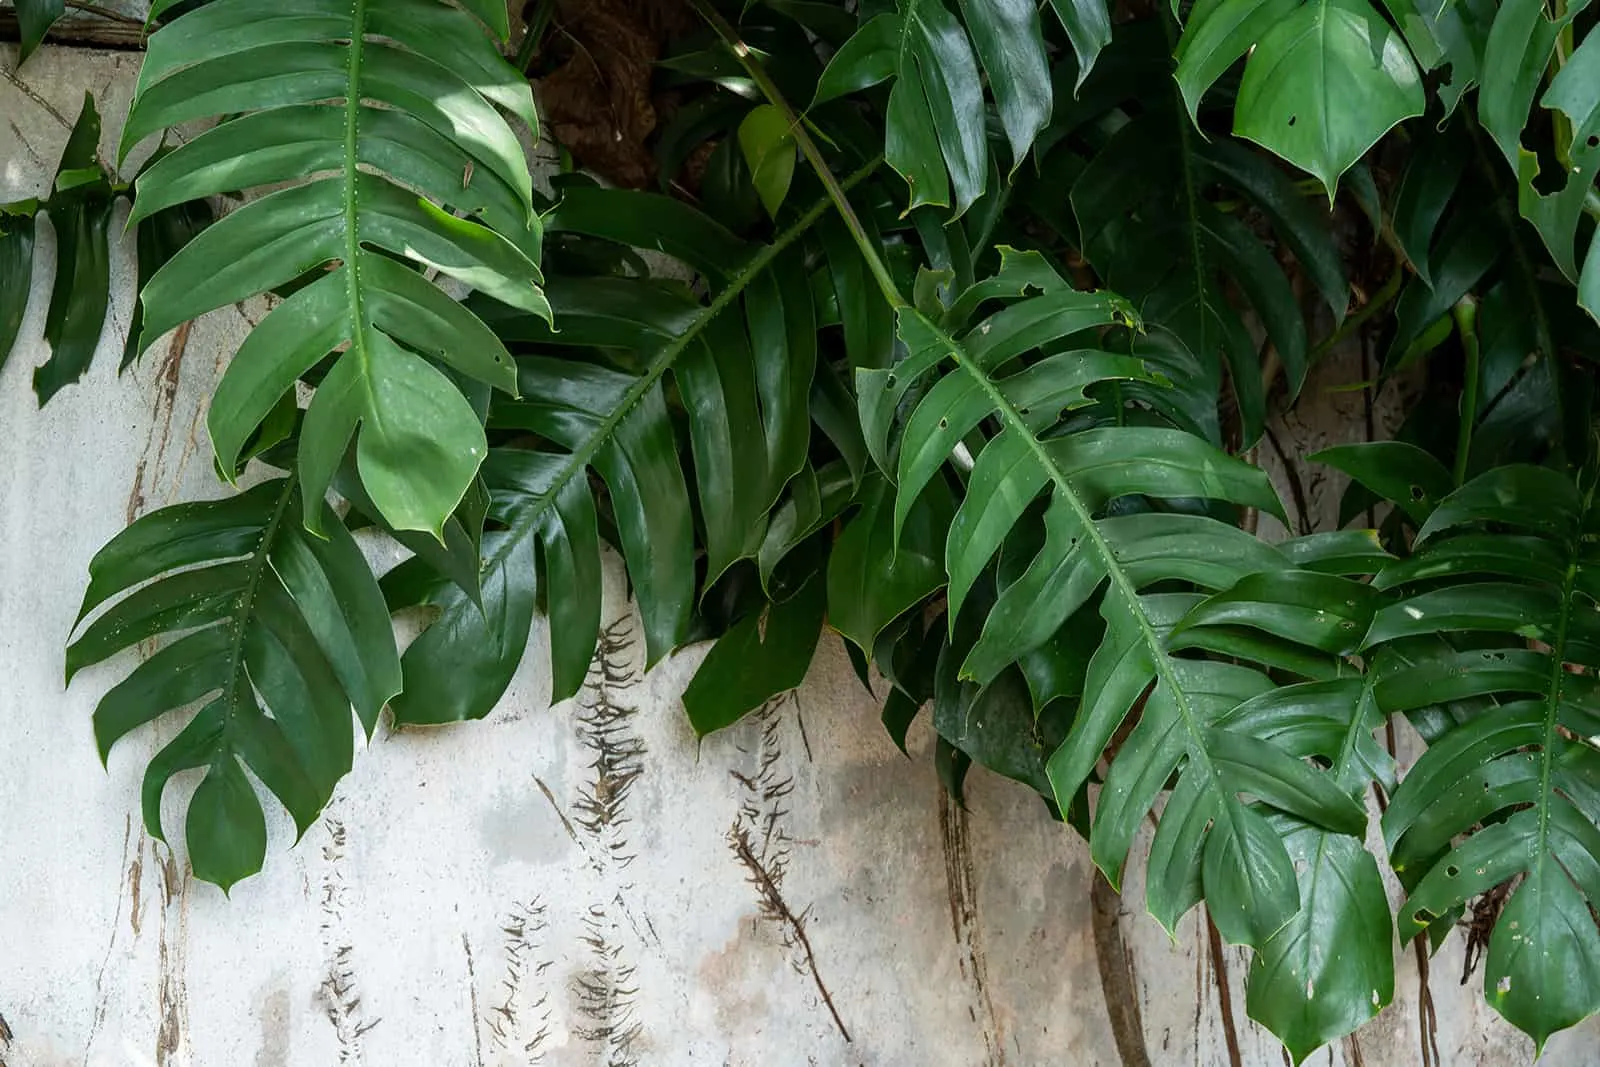 Lush of Epipremnum Pinnatum leaves growing on wall